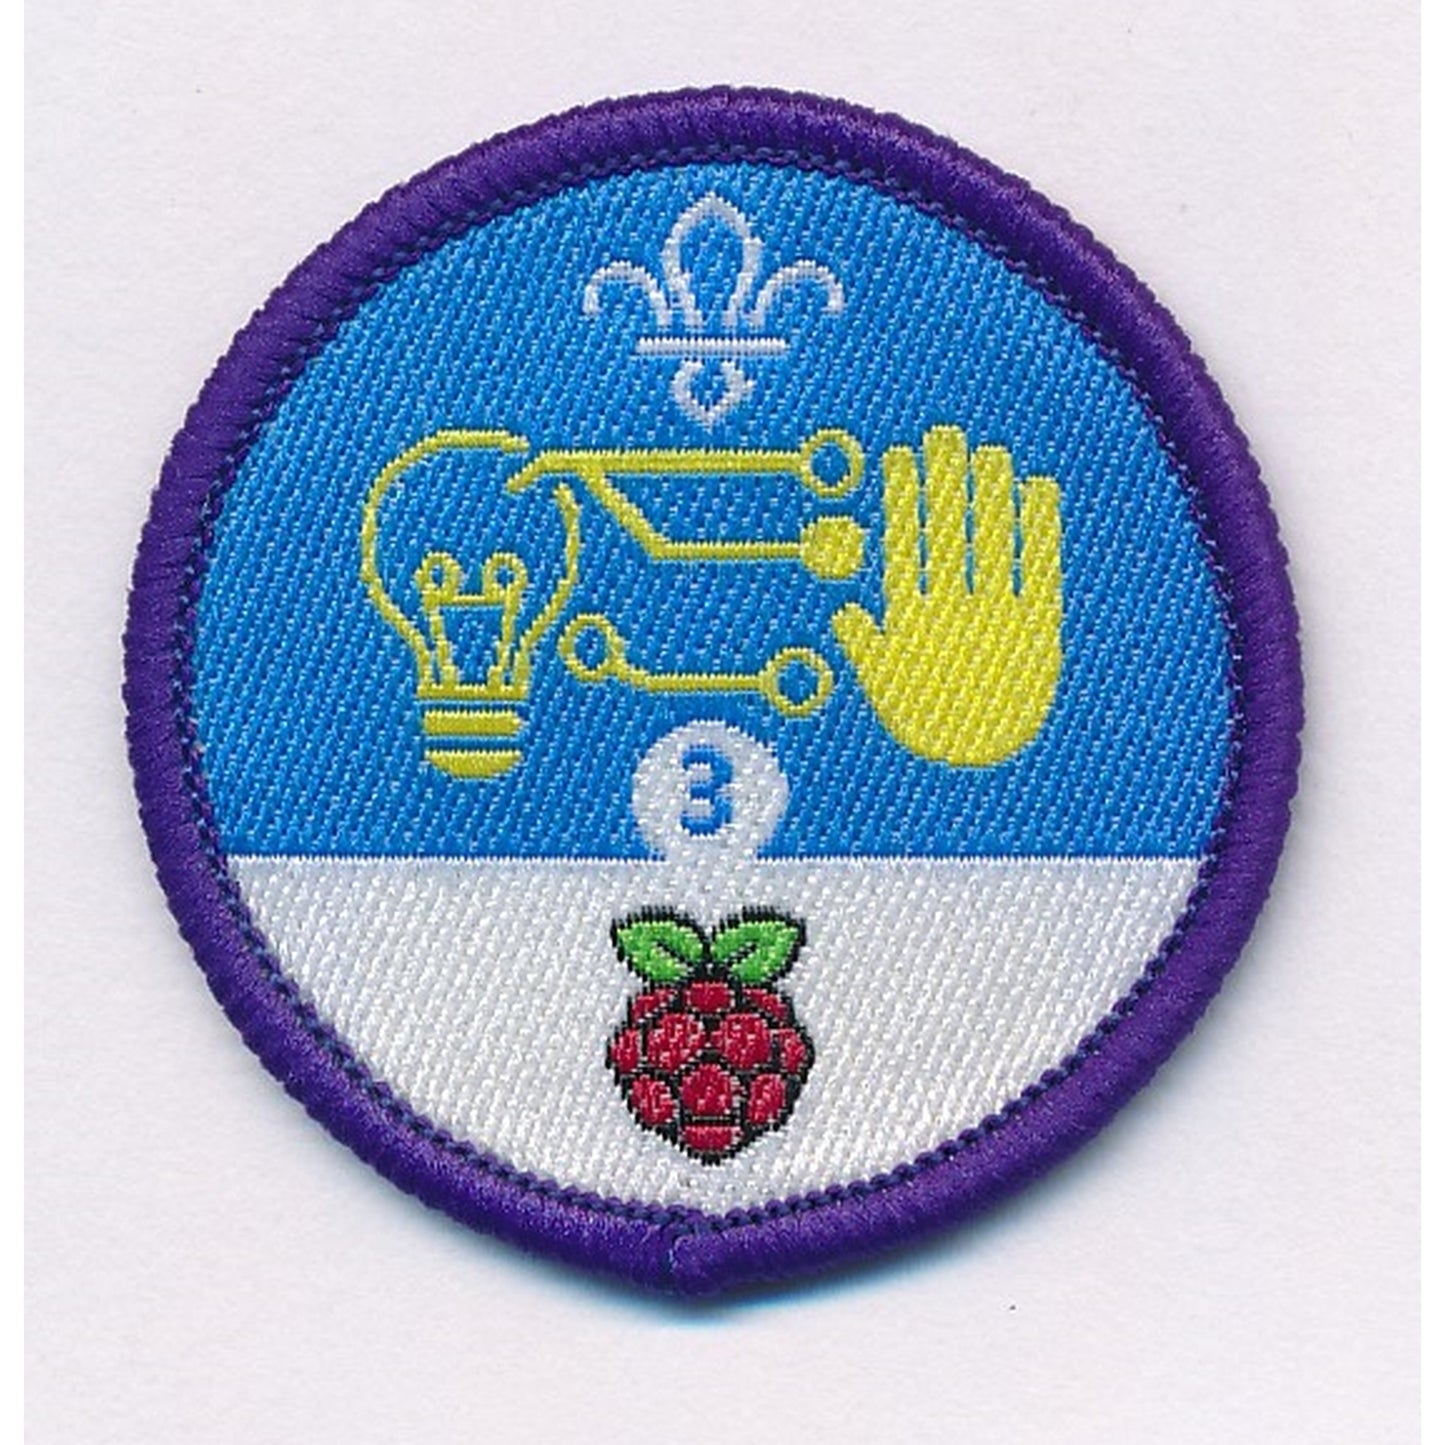 Digital Maker Staged Activity Badge (Raspberry Pi)